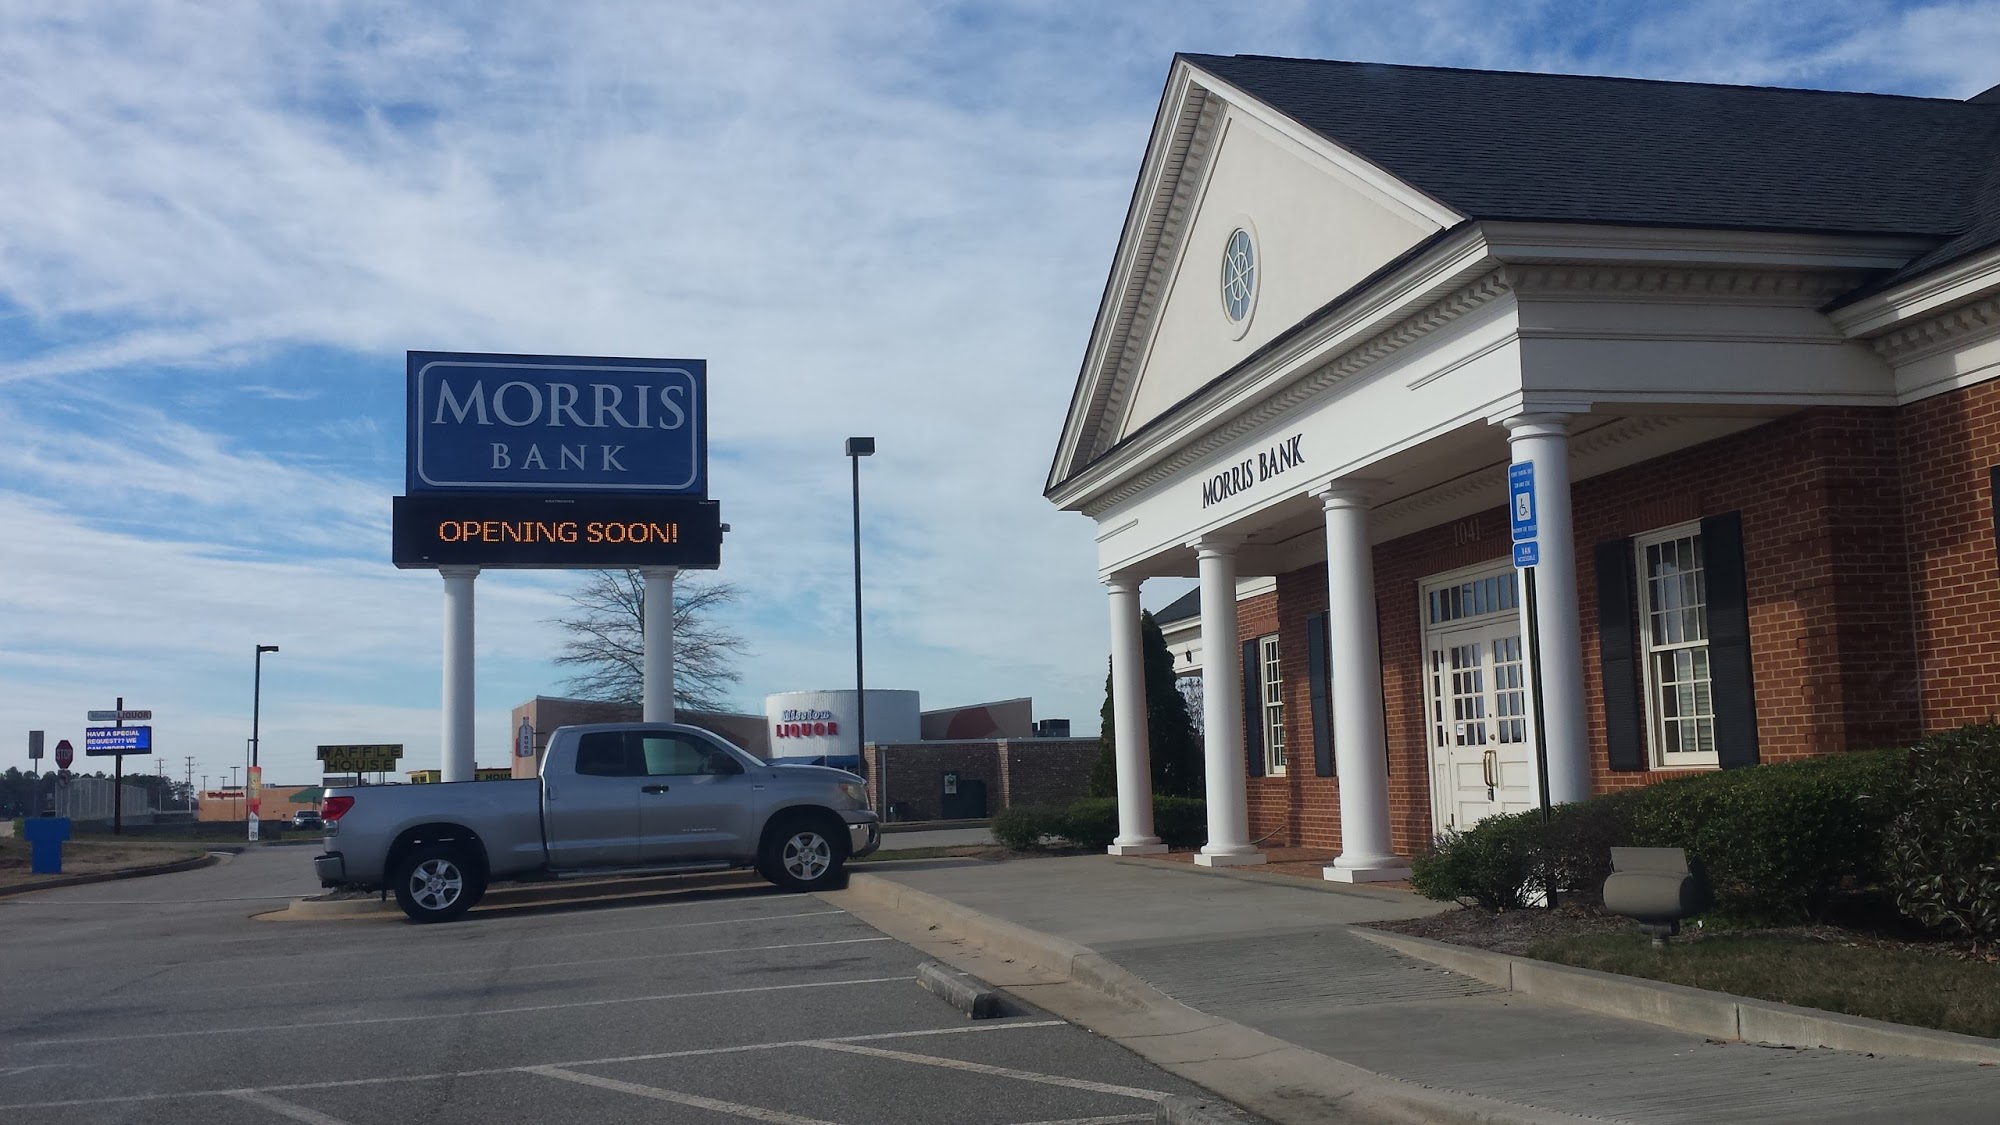 Morris Bank